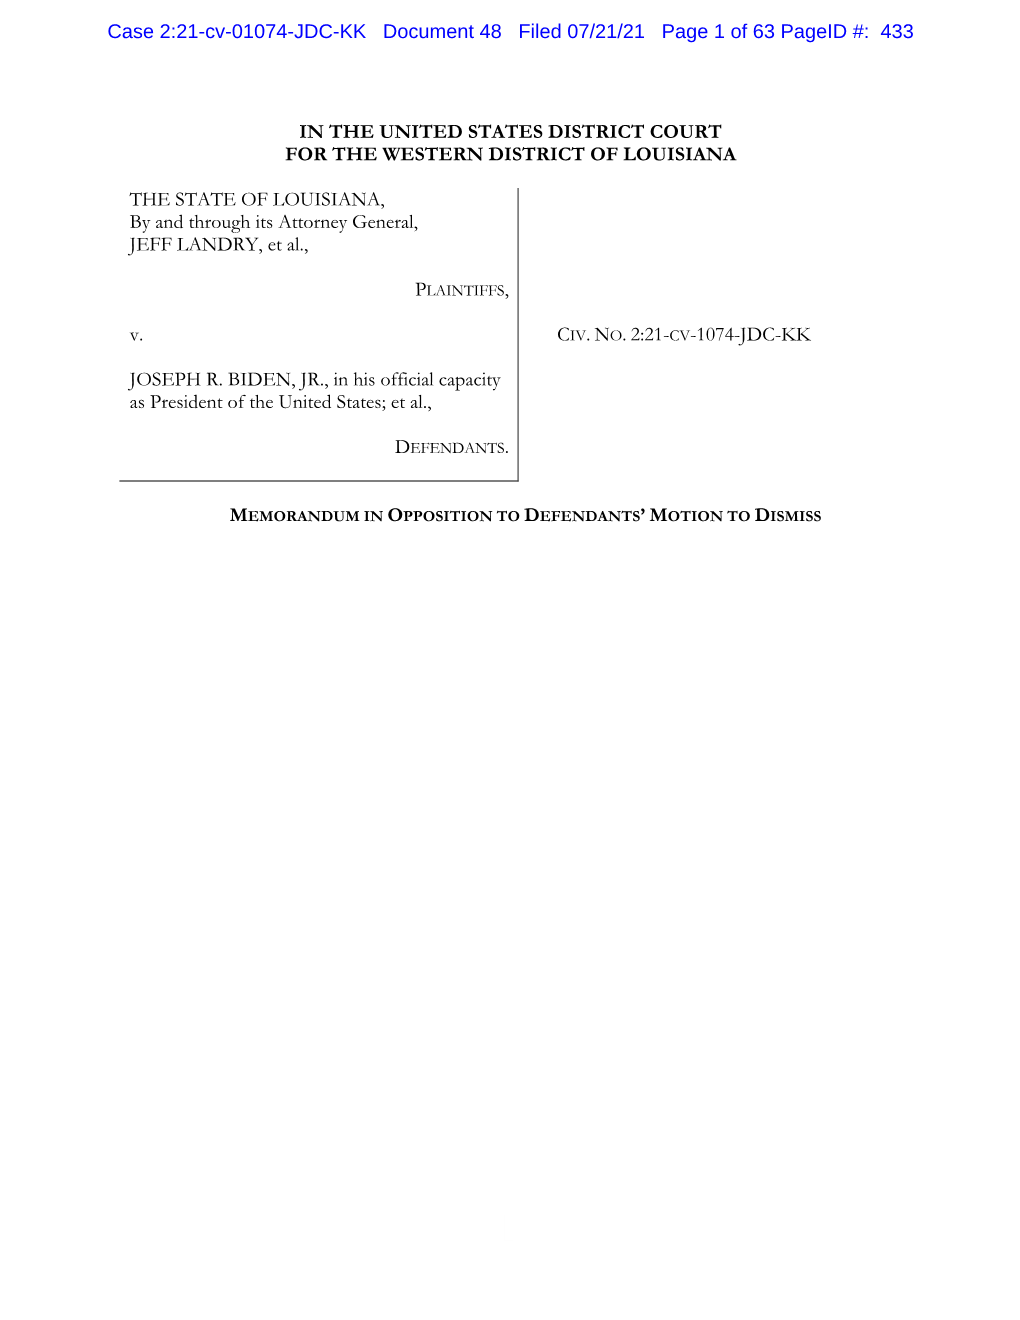 Case 2:21-Cv-01074-JDC-KK Document 48 Filed 07/21/21 Page 1 of 63 Pageid #: 433